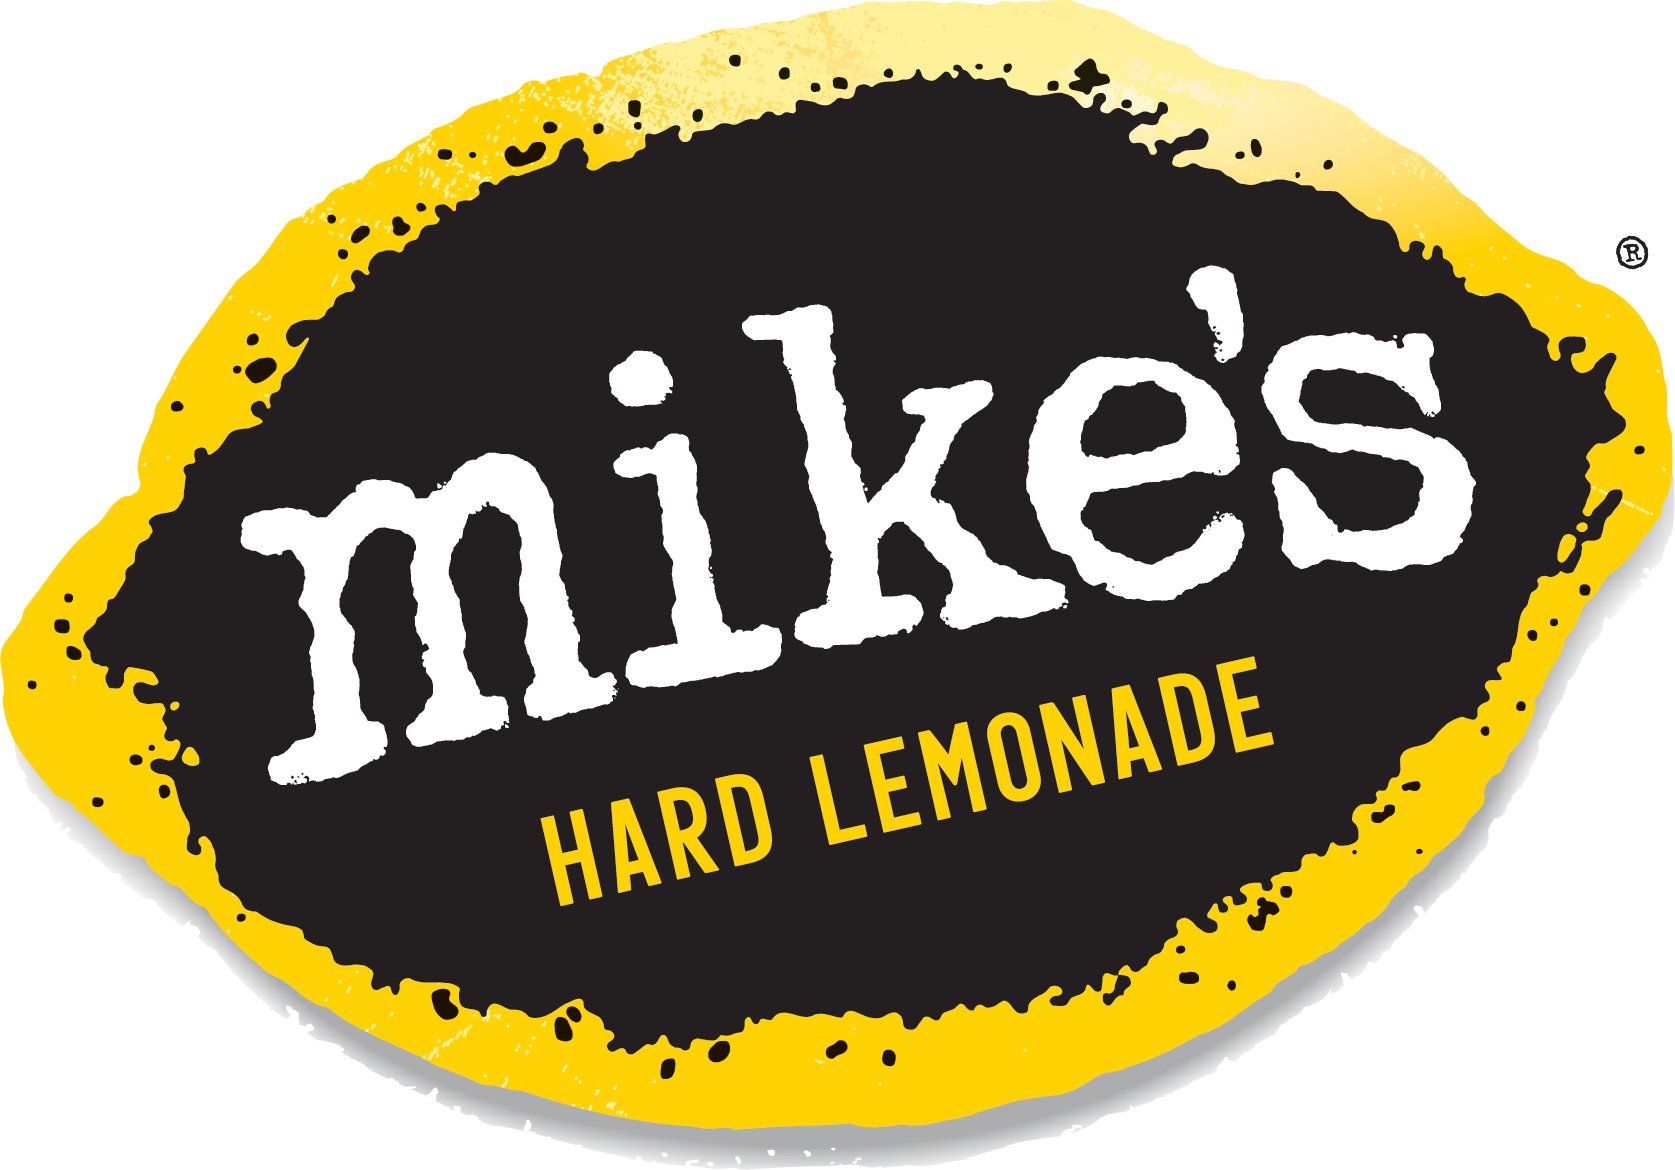 Mike's Hard Lemonade logo